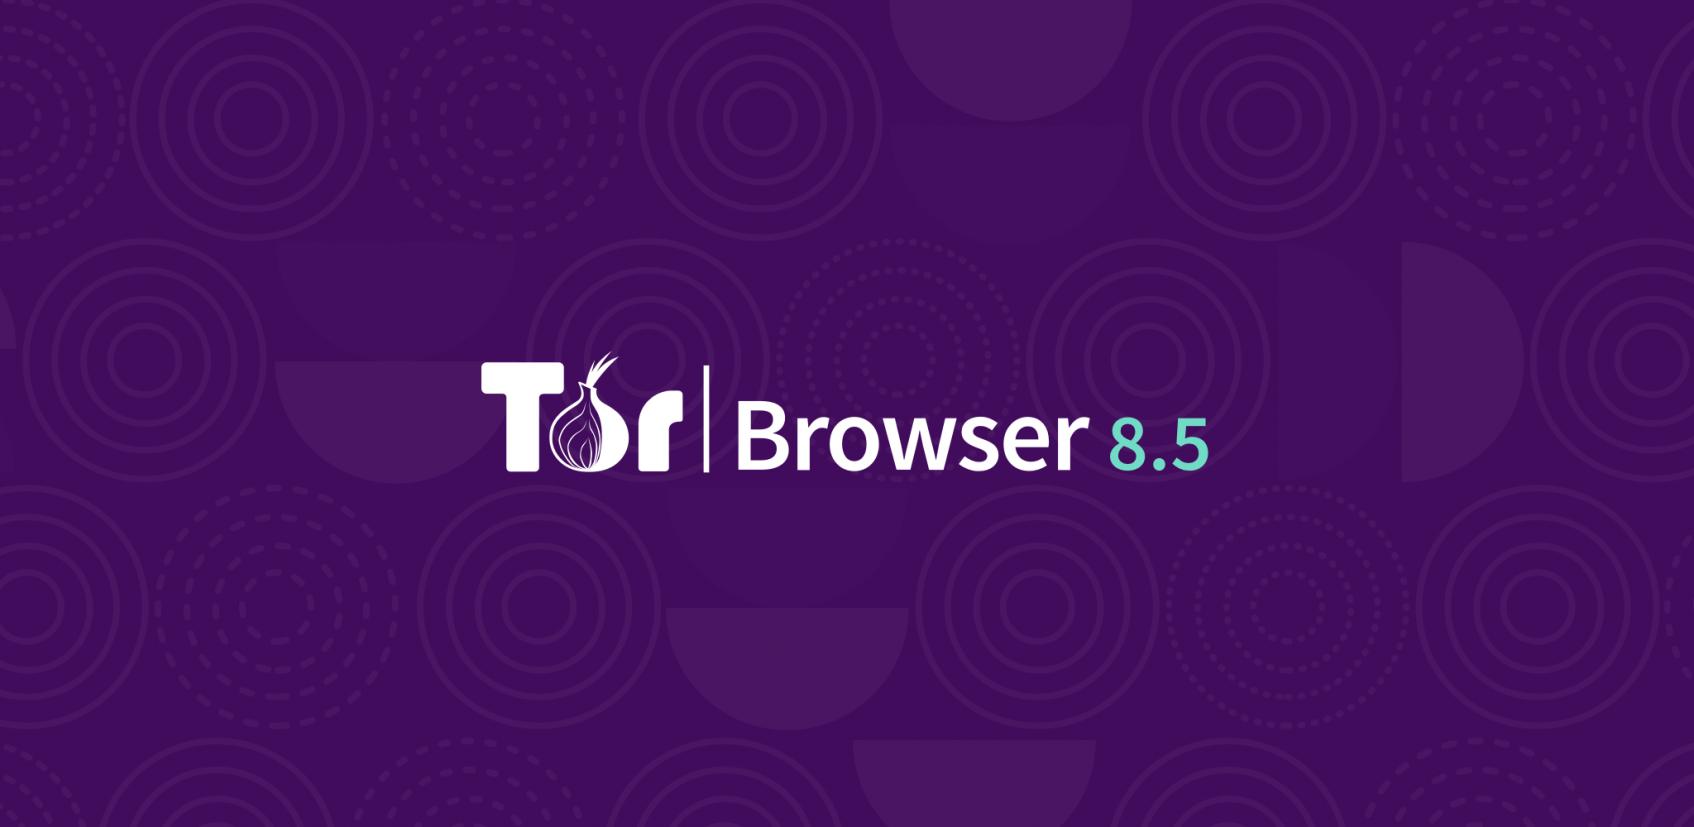 Tor browser принцип работы hudra tor browser беларусь gydra